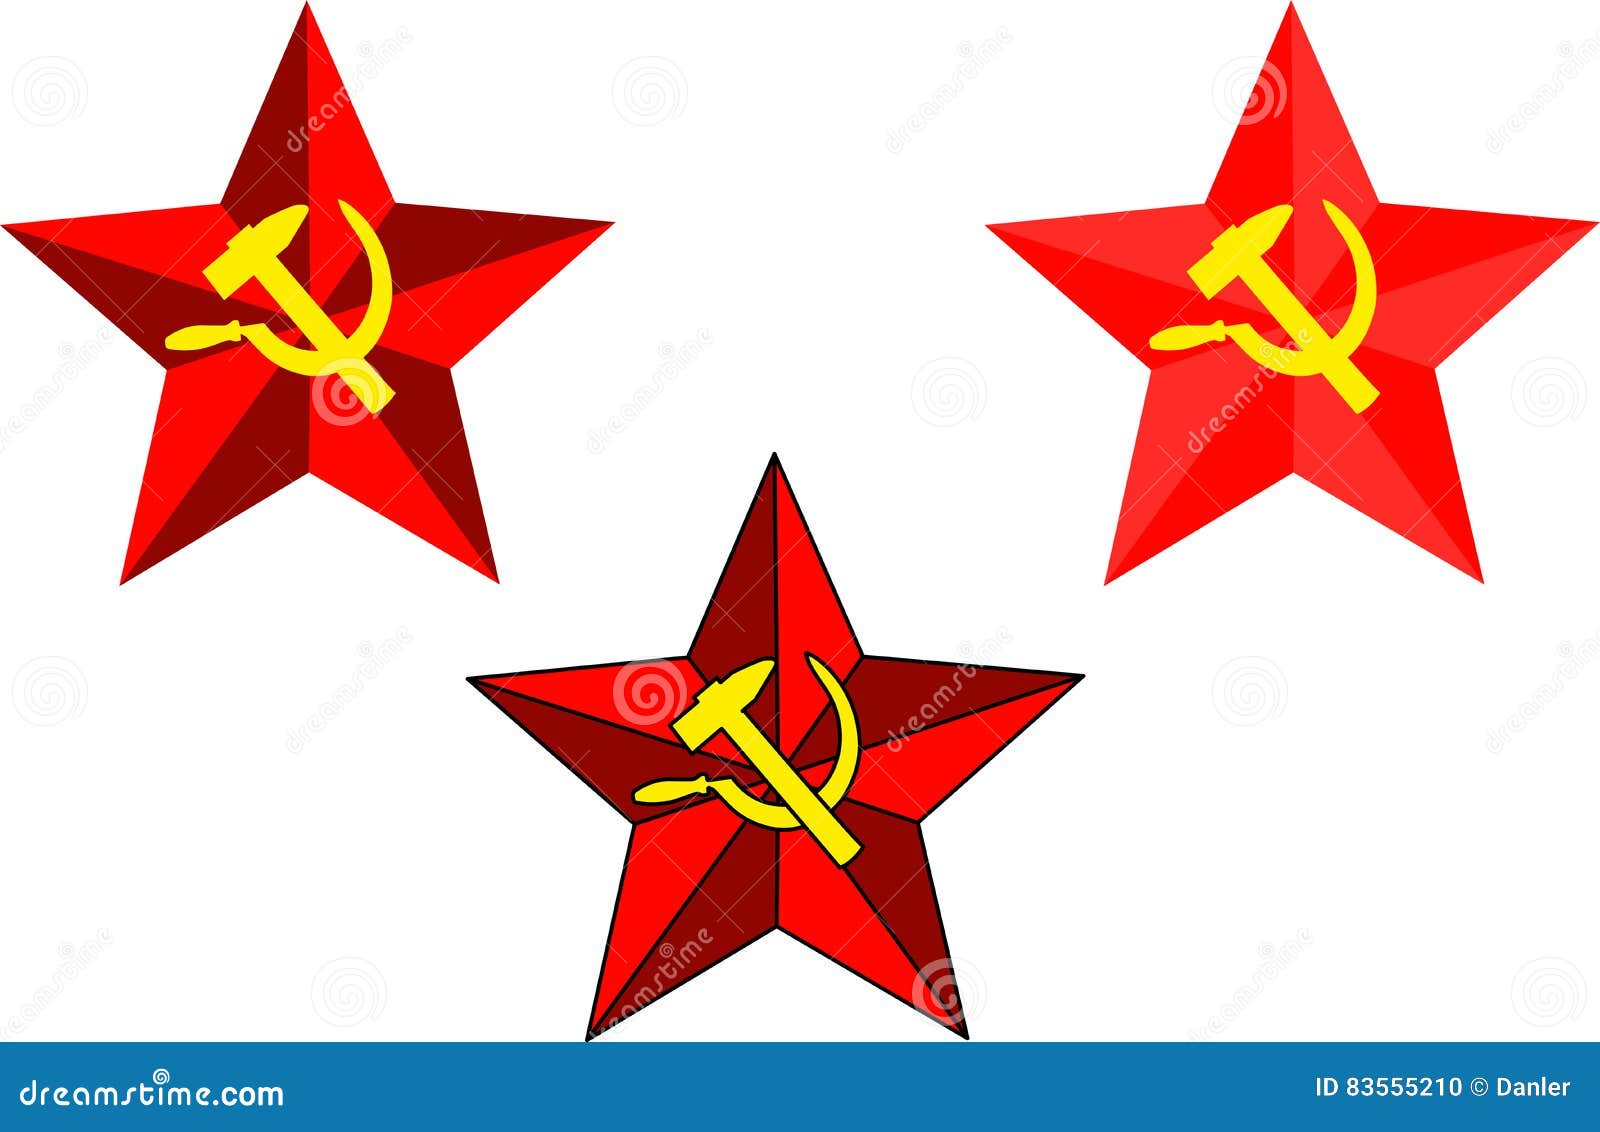 soviet star, hammer and sickle